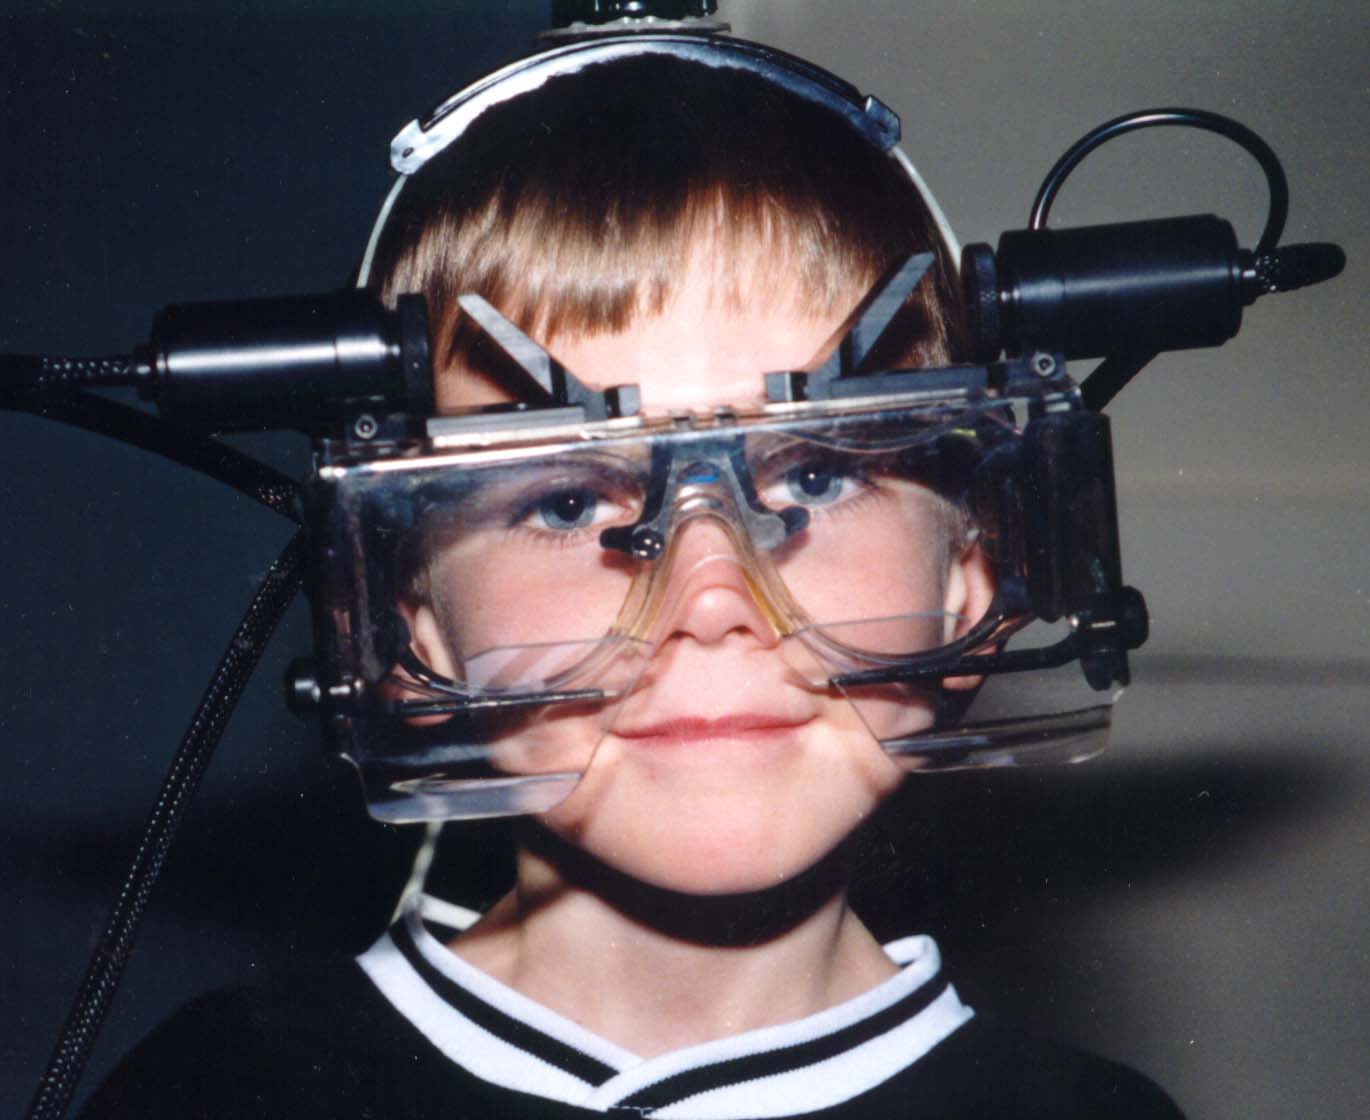 eyetracker headset on child